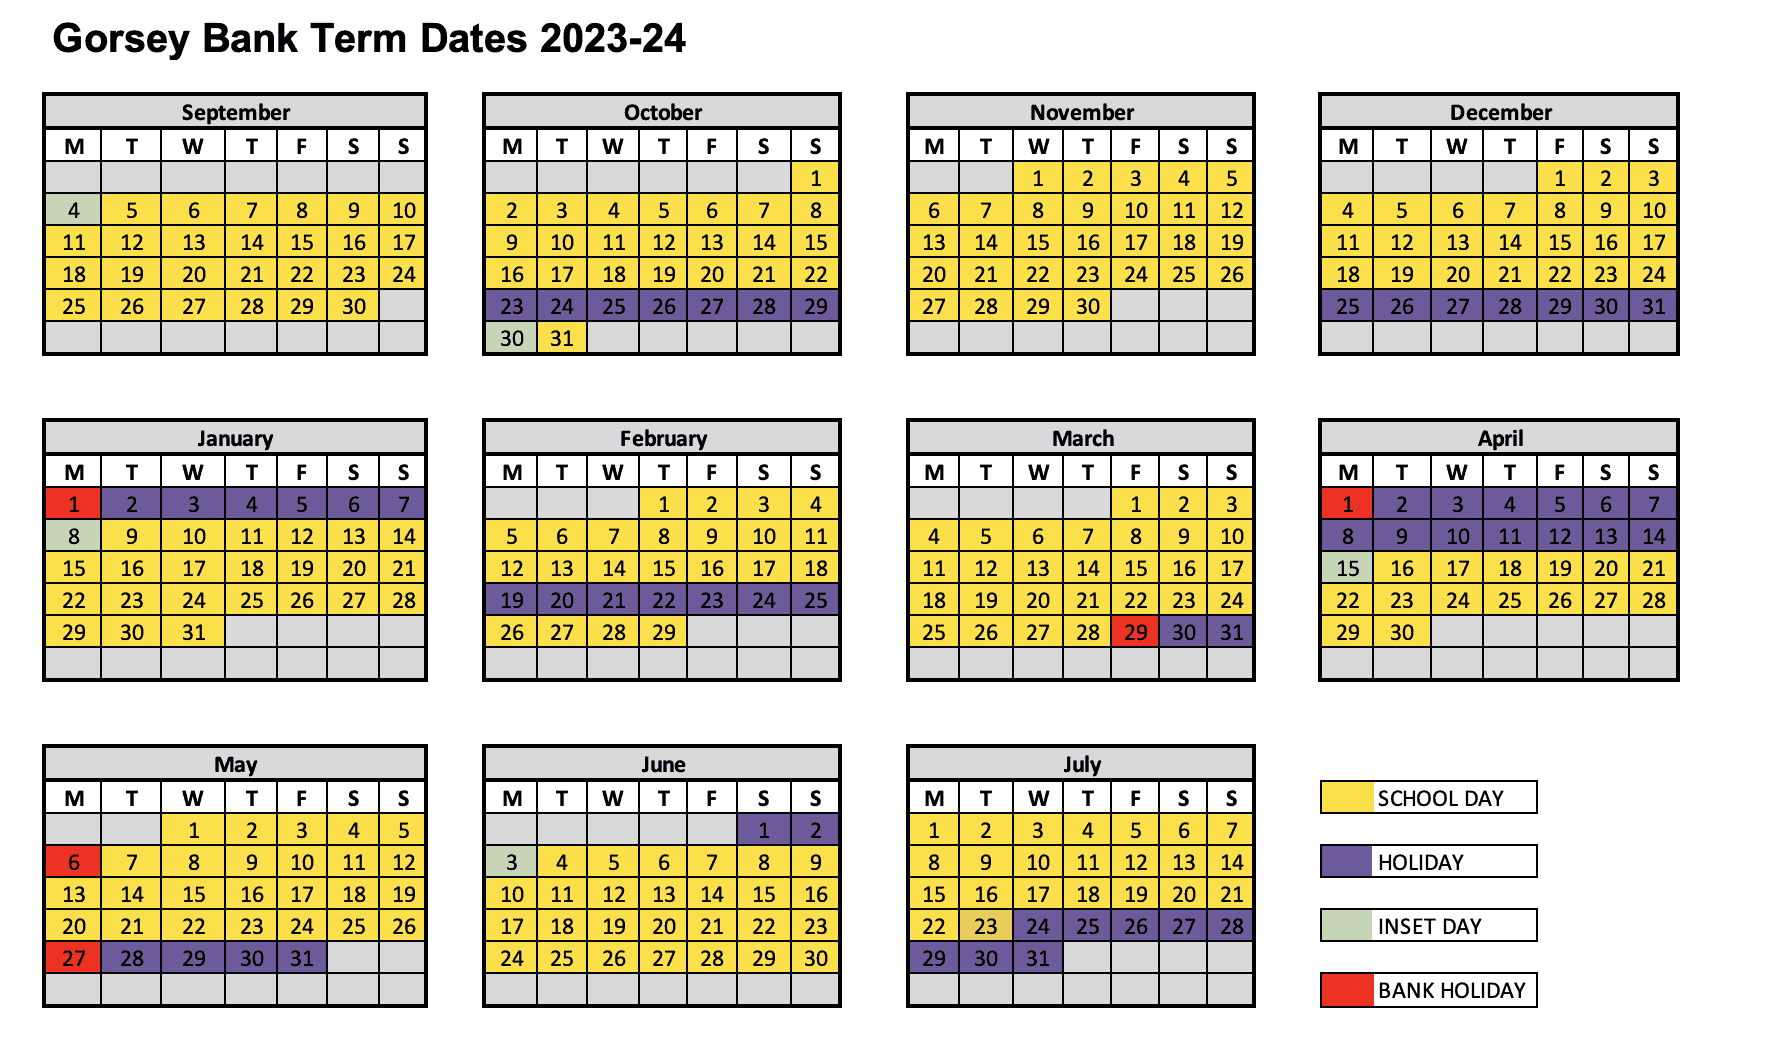 Gorsey Bank Term Dates 2023-24.